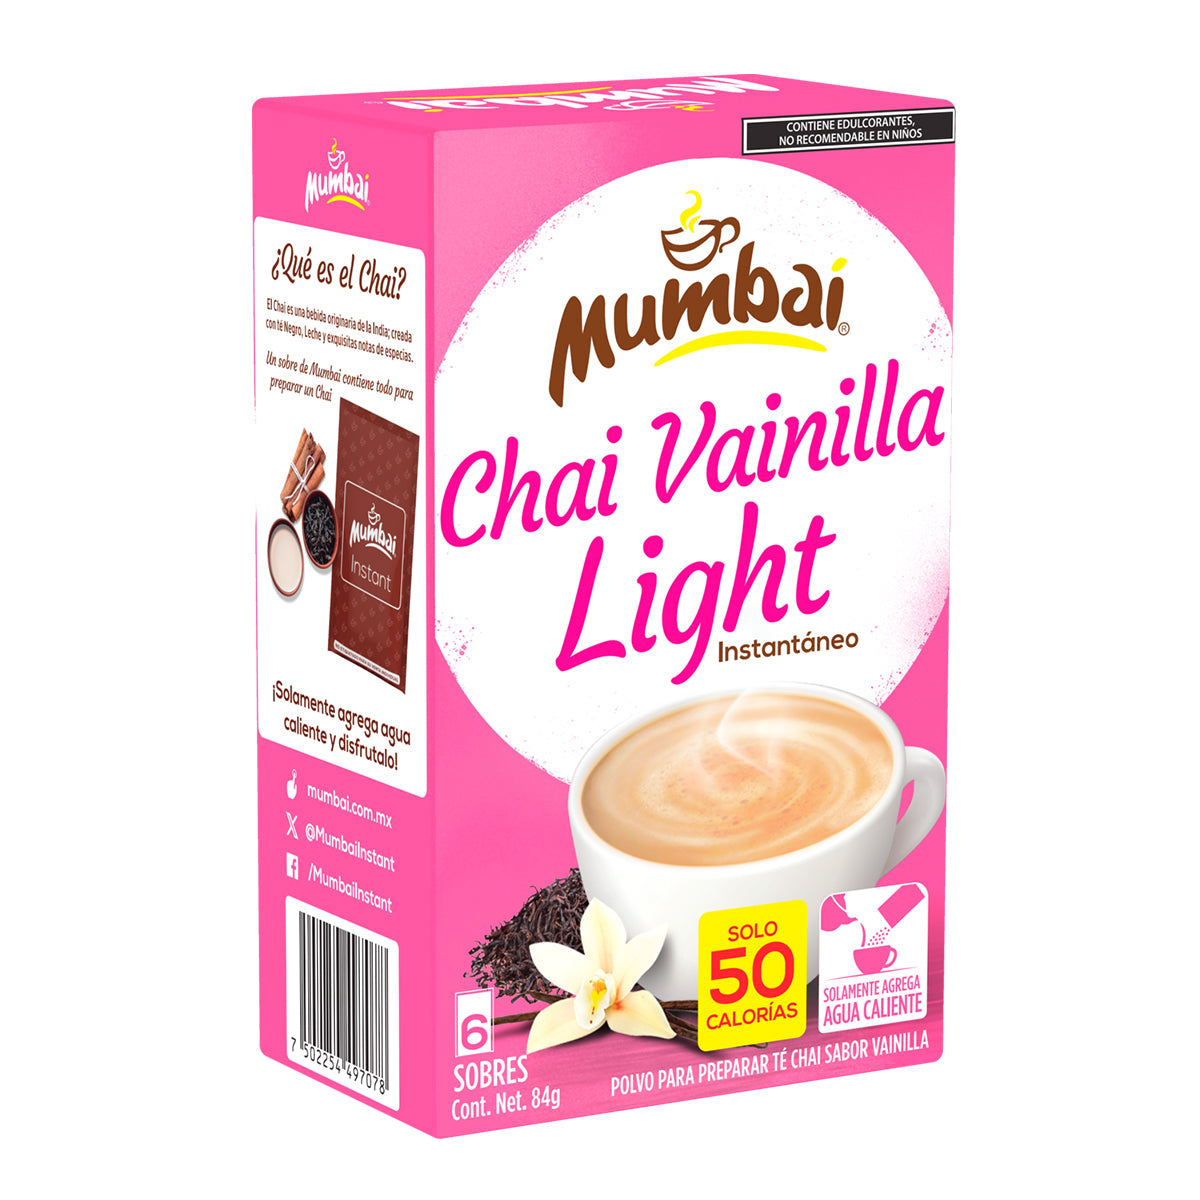 Mumbai Té Chai Light sabor Vainilla 6 sobres